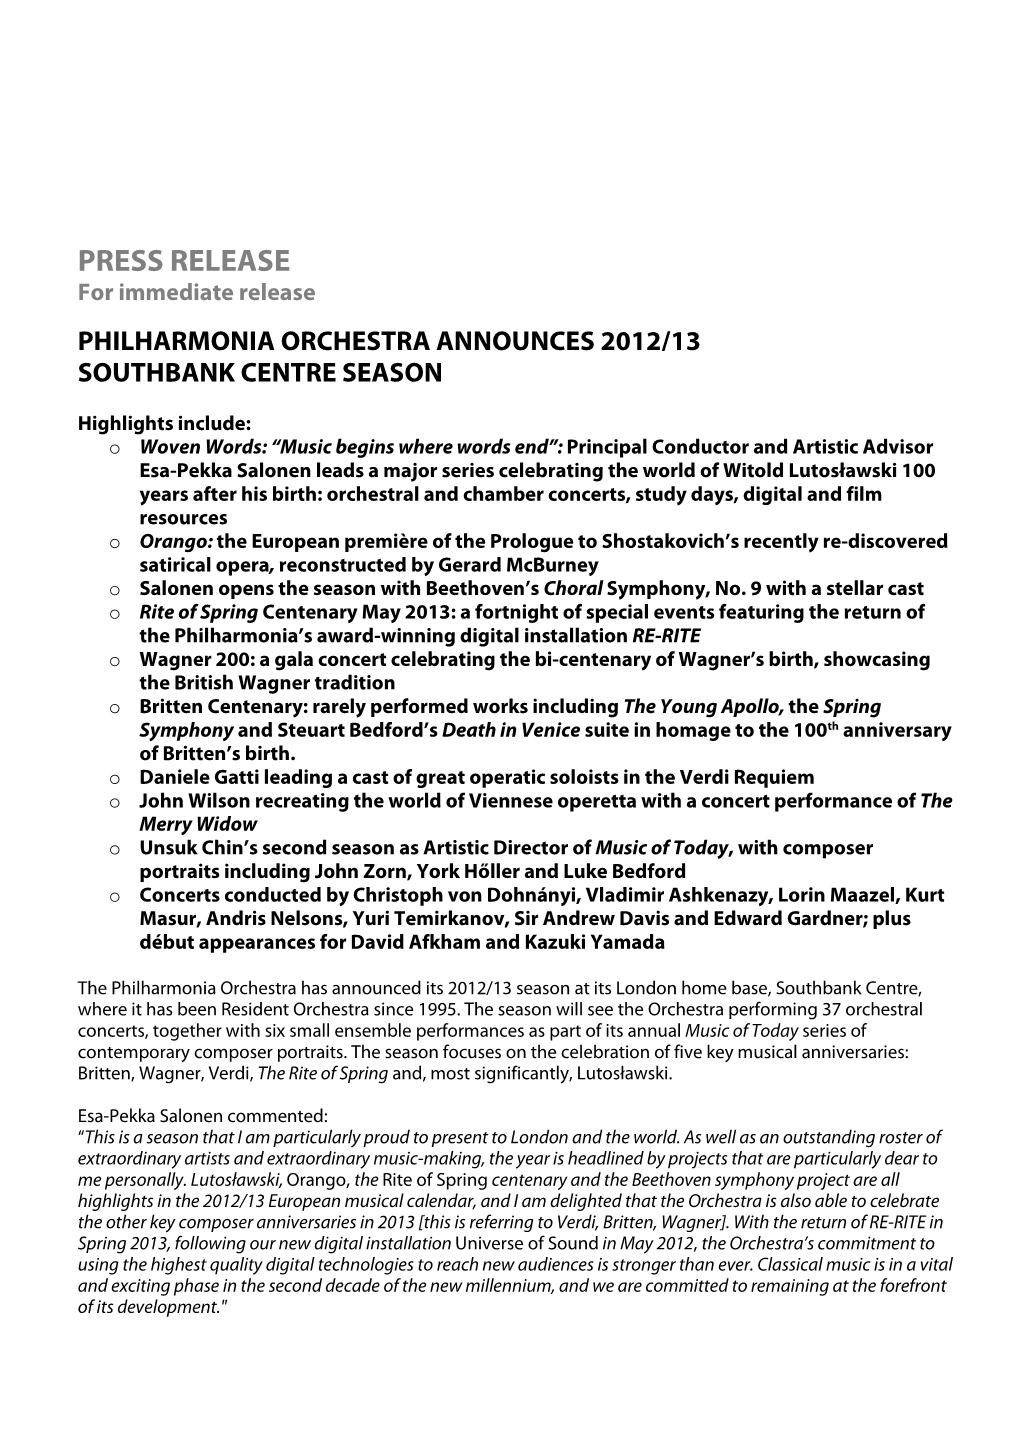 PRESS RELEASE for Immediate Release PHILH ARMONIA ORCHESTRA ANNOUNCES 2012/13 SOUTHBANK CENTRE SEASON